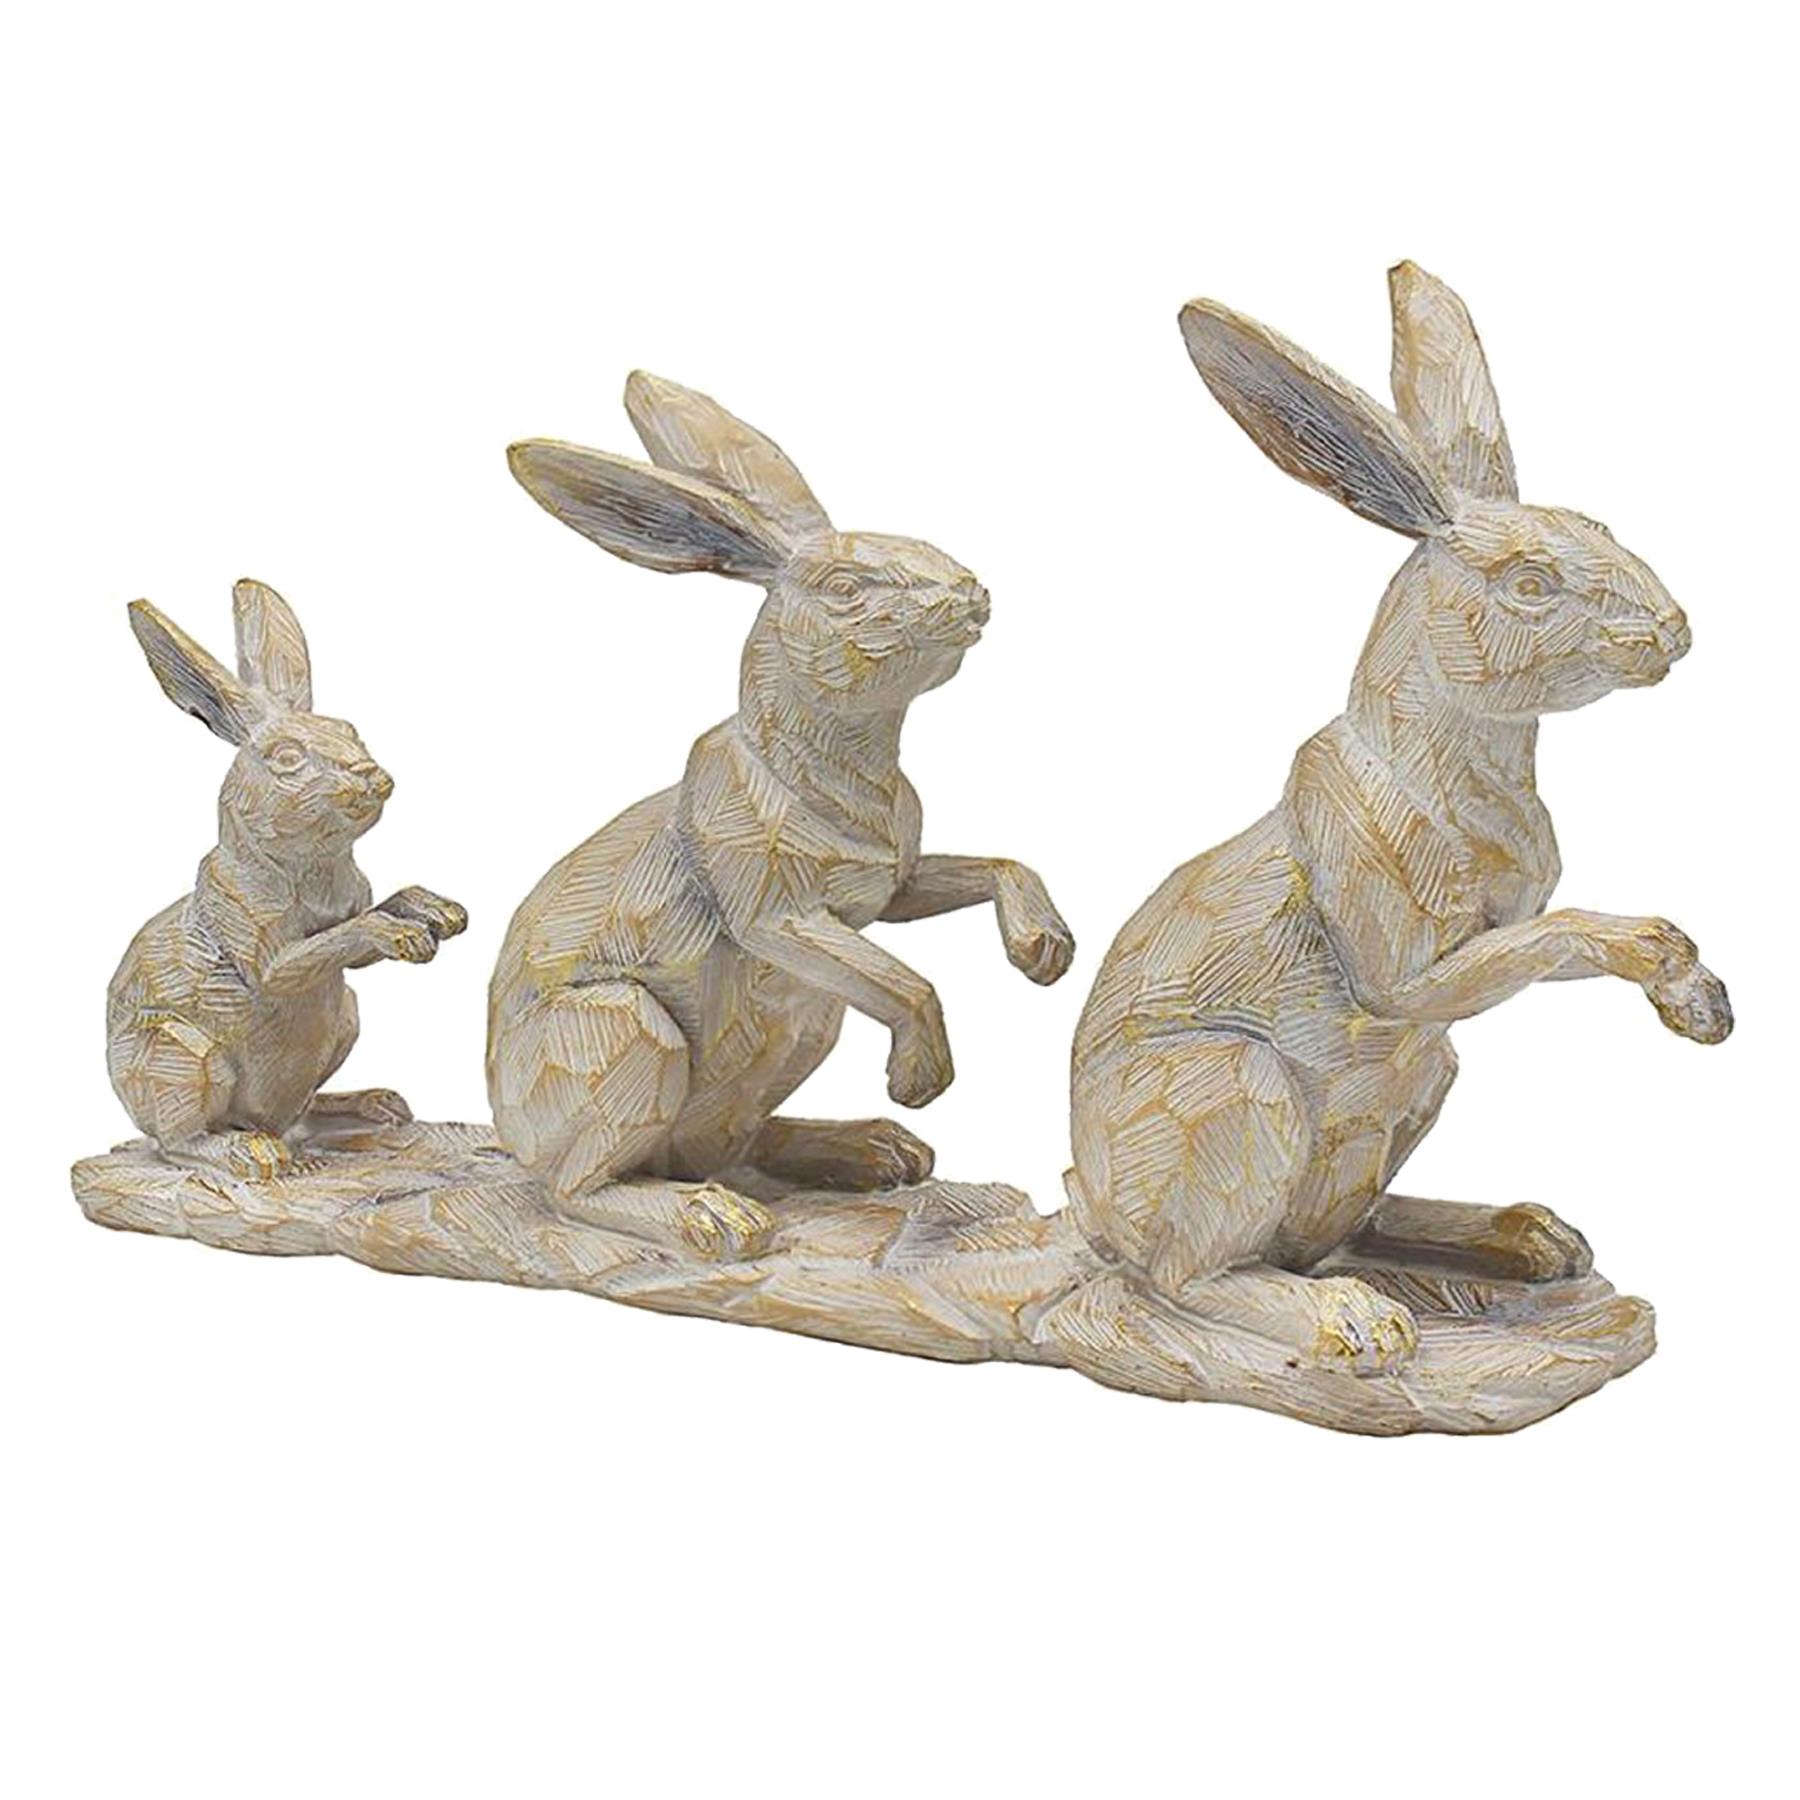 Animal Family Ornament Driftwood Effect Sculpture - Rabbit / Hares